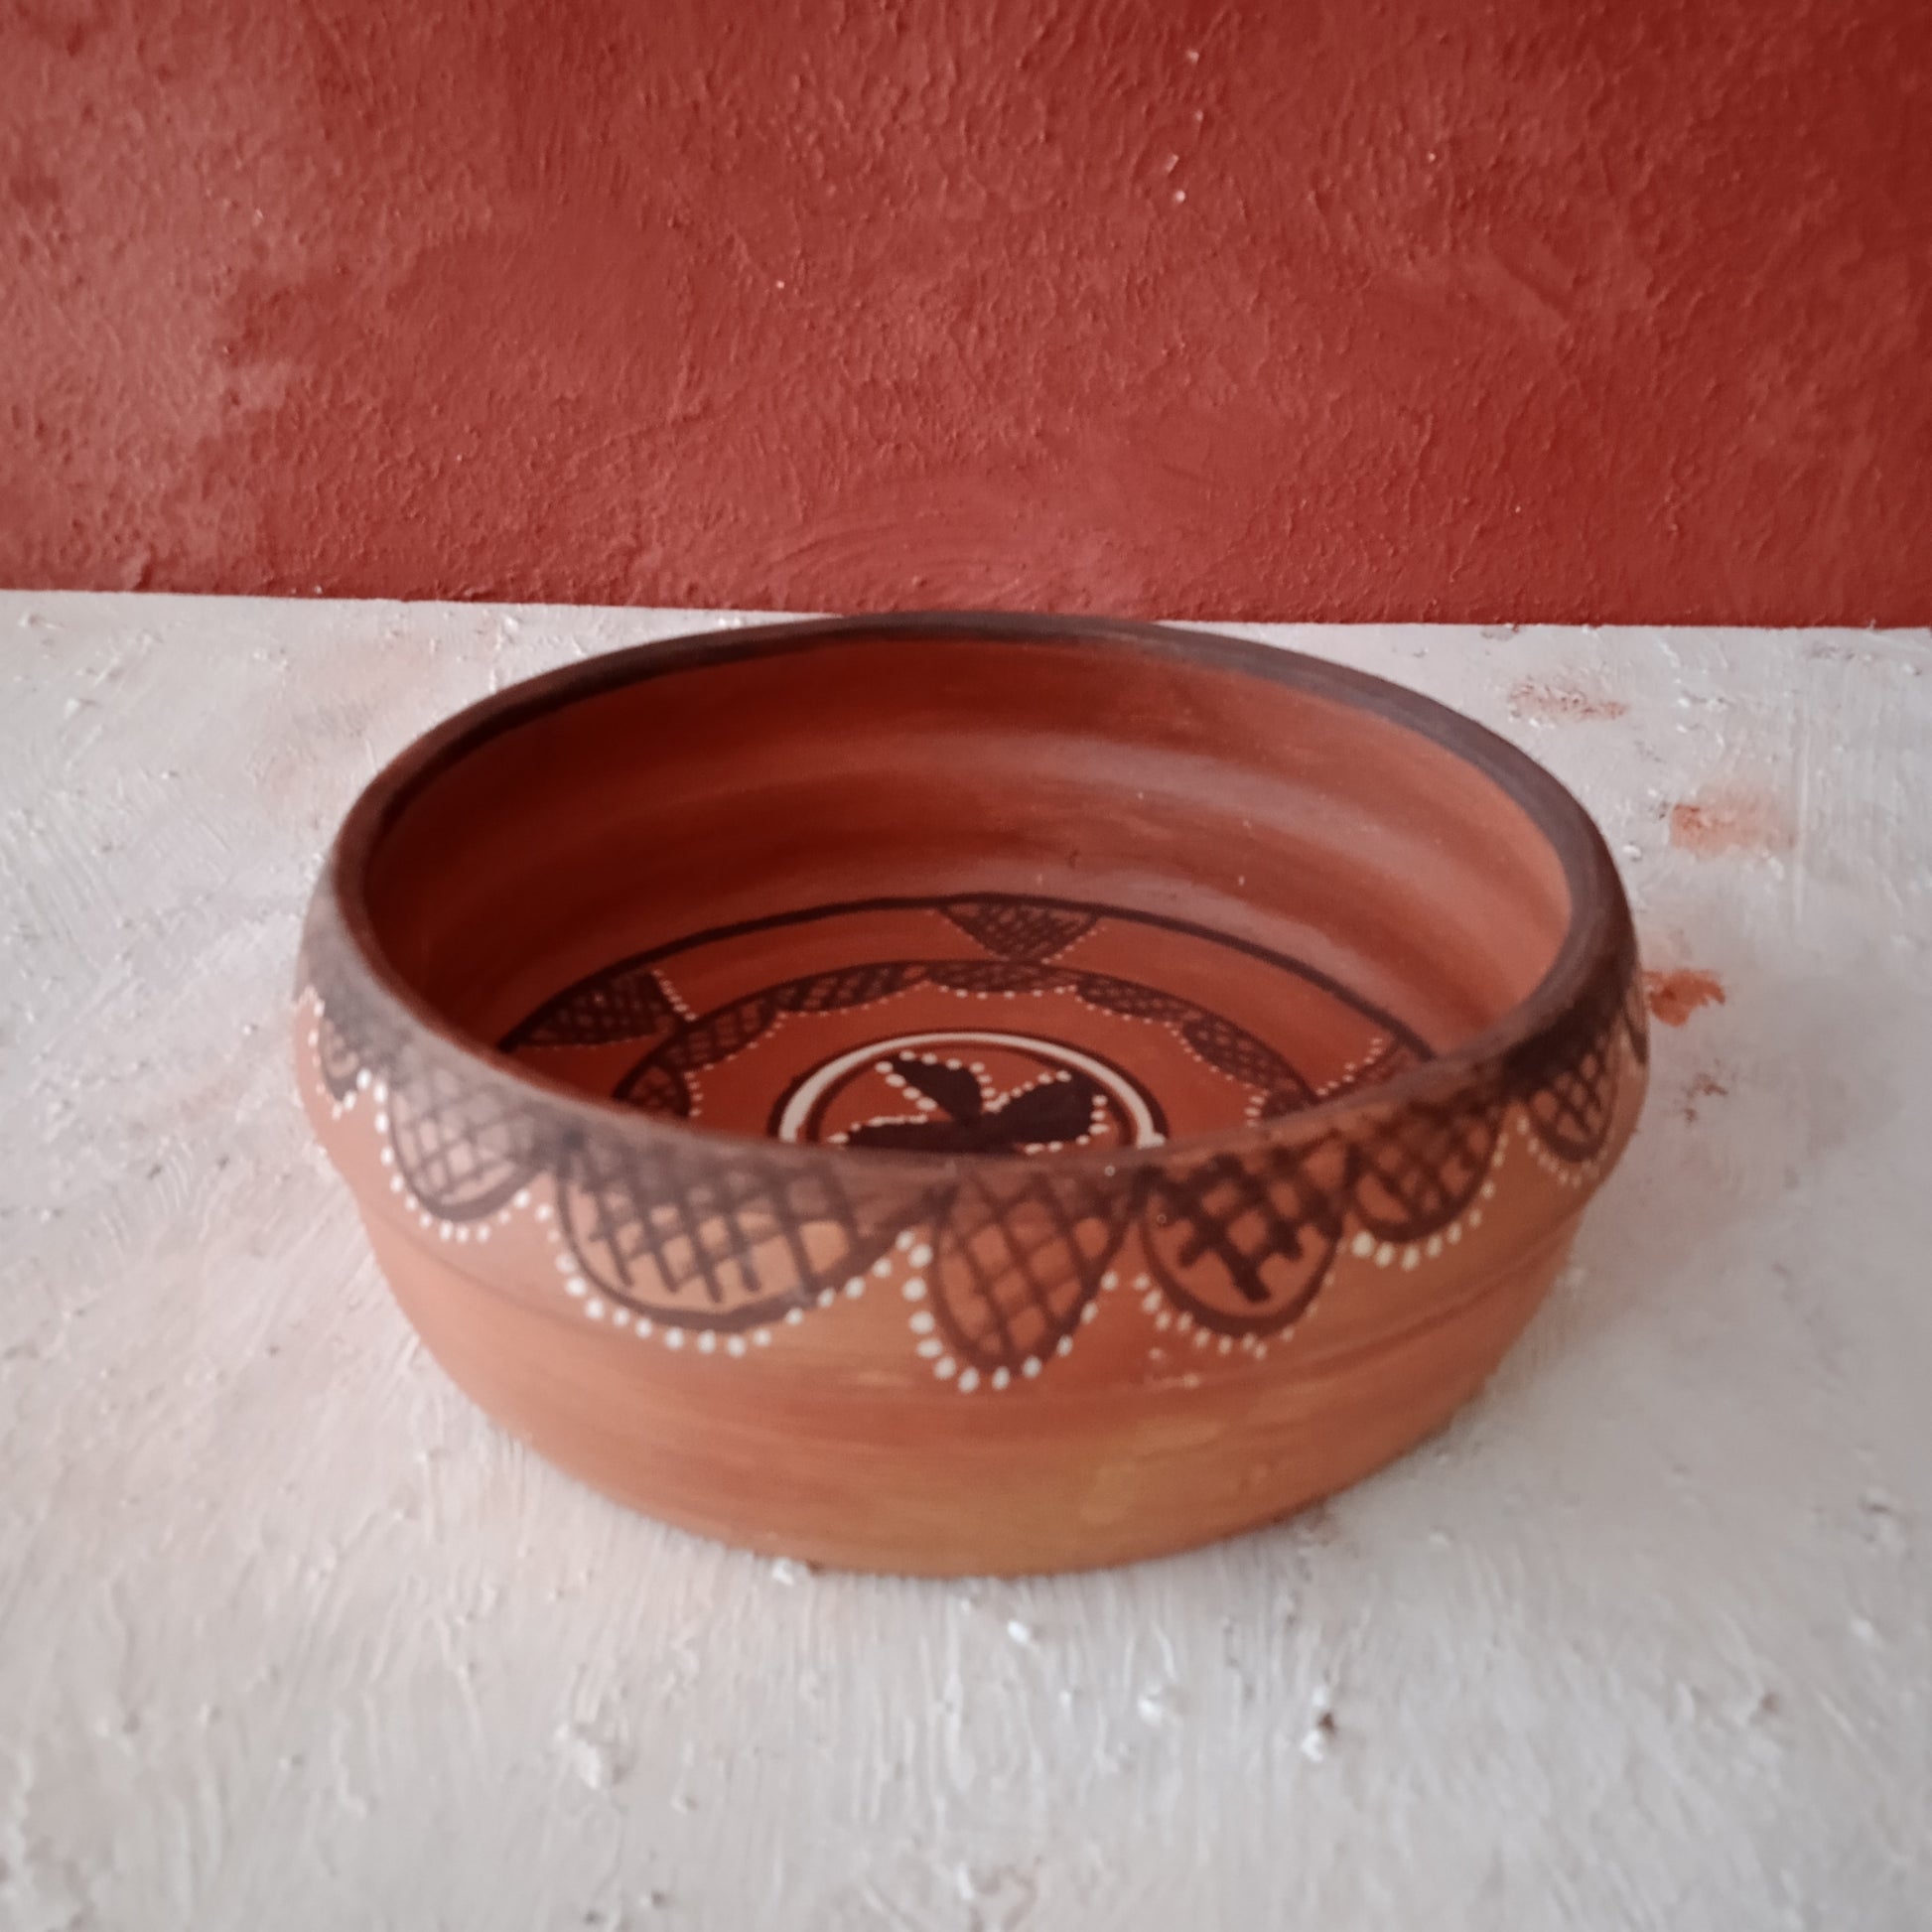 Gundiyali Terracotta Serving Bowl 1 - 8 Inch